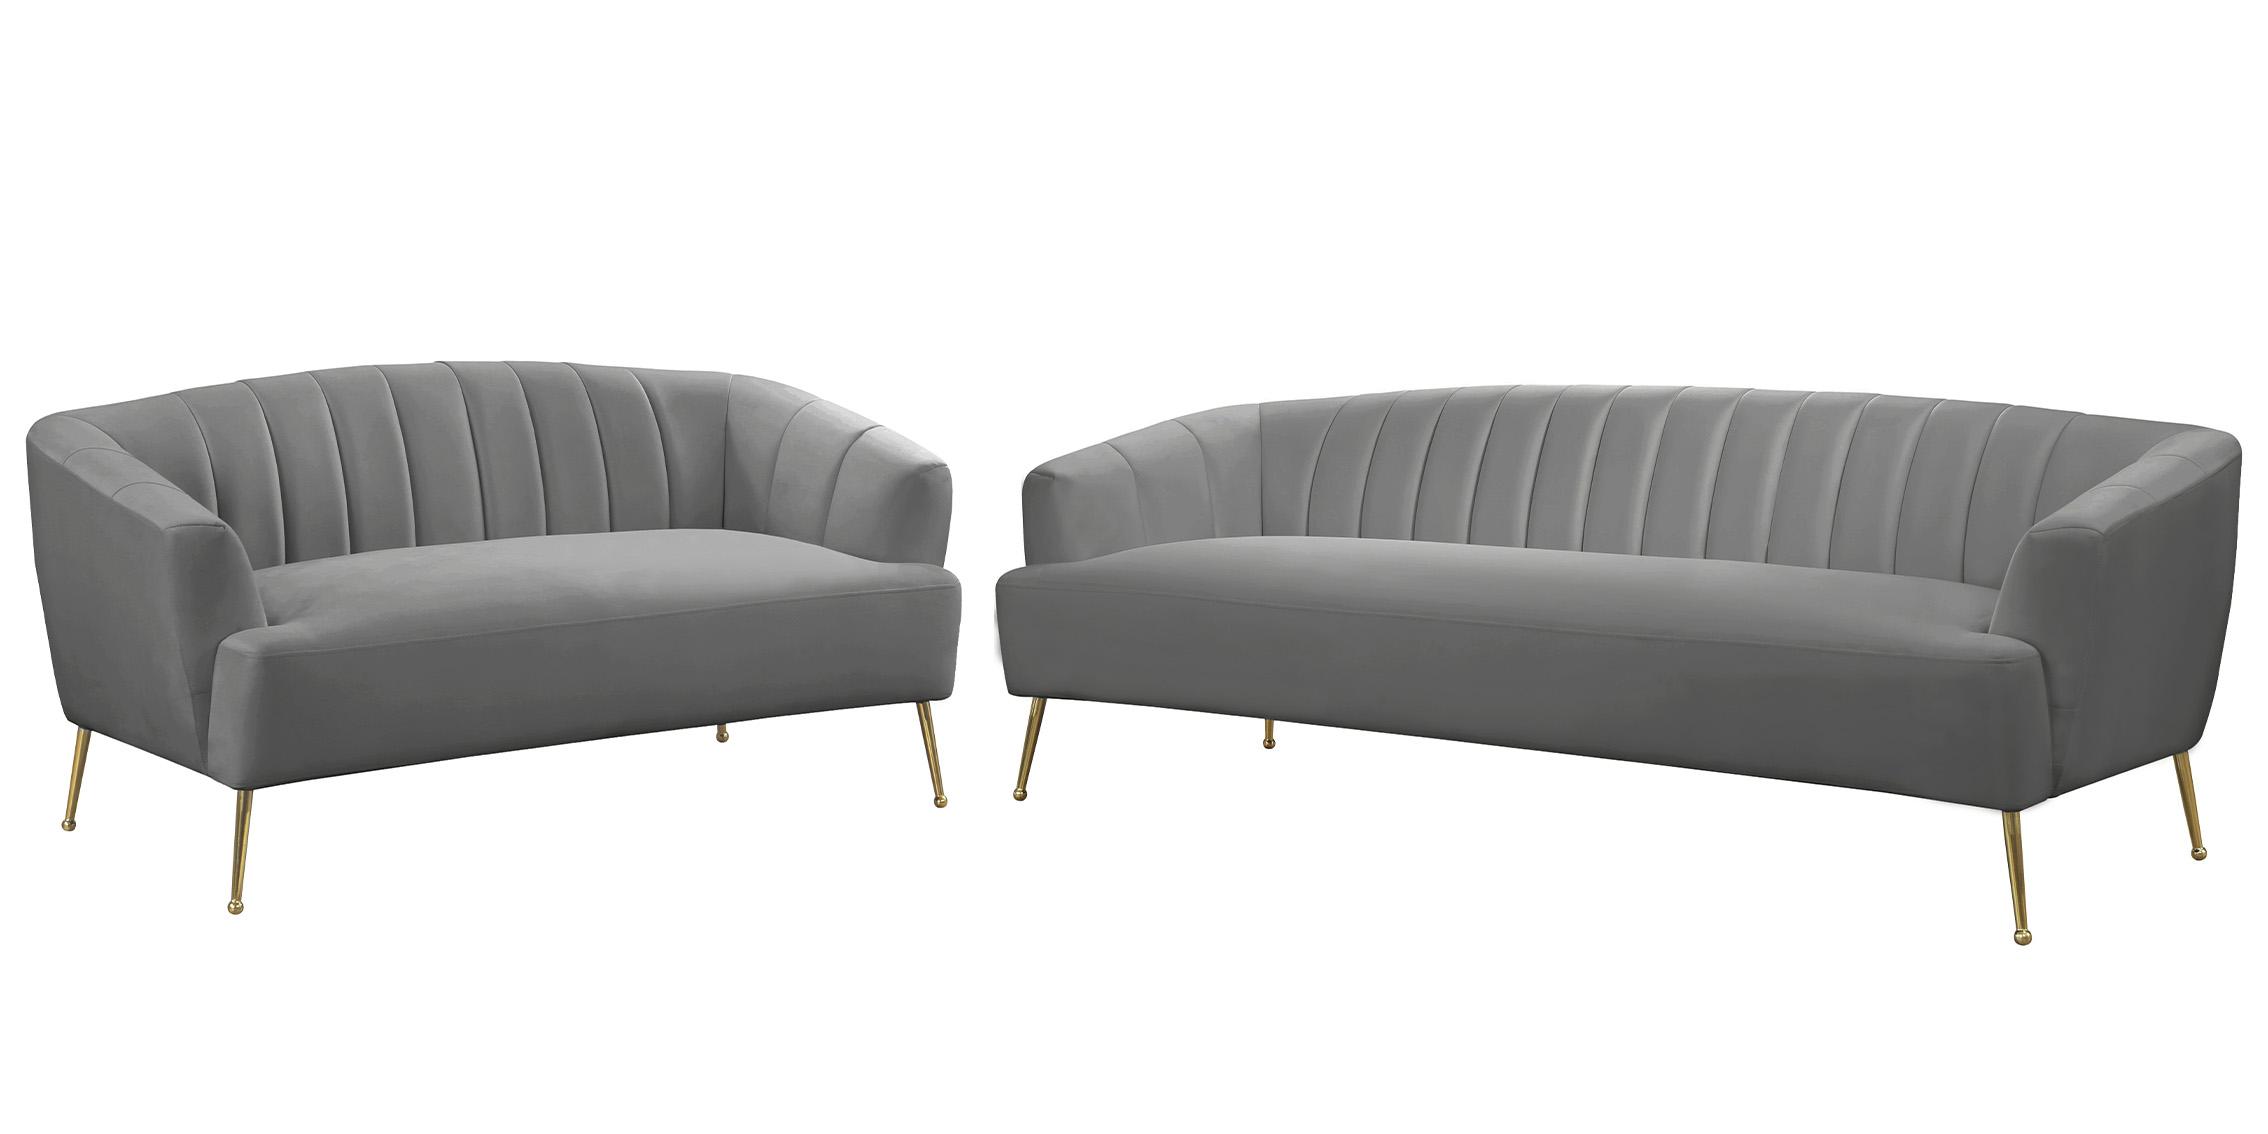 Contemporary, Modern Sofa Set TORI 657Grey-S-Set-2 657Grey-S-Set-2 in Gray Velvet